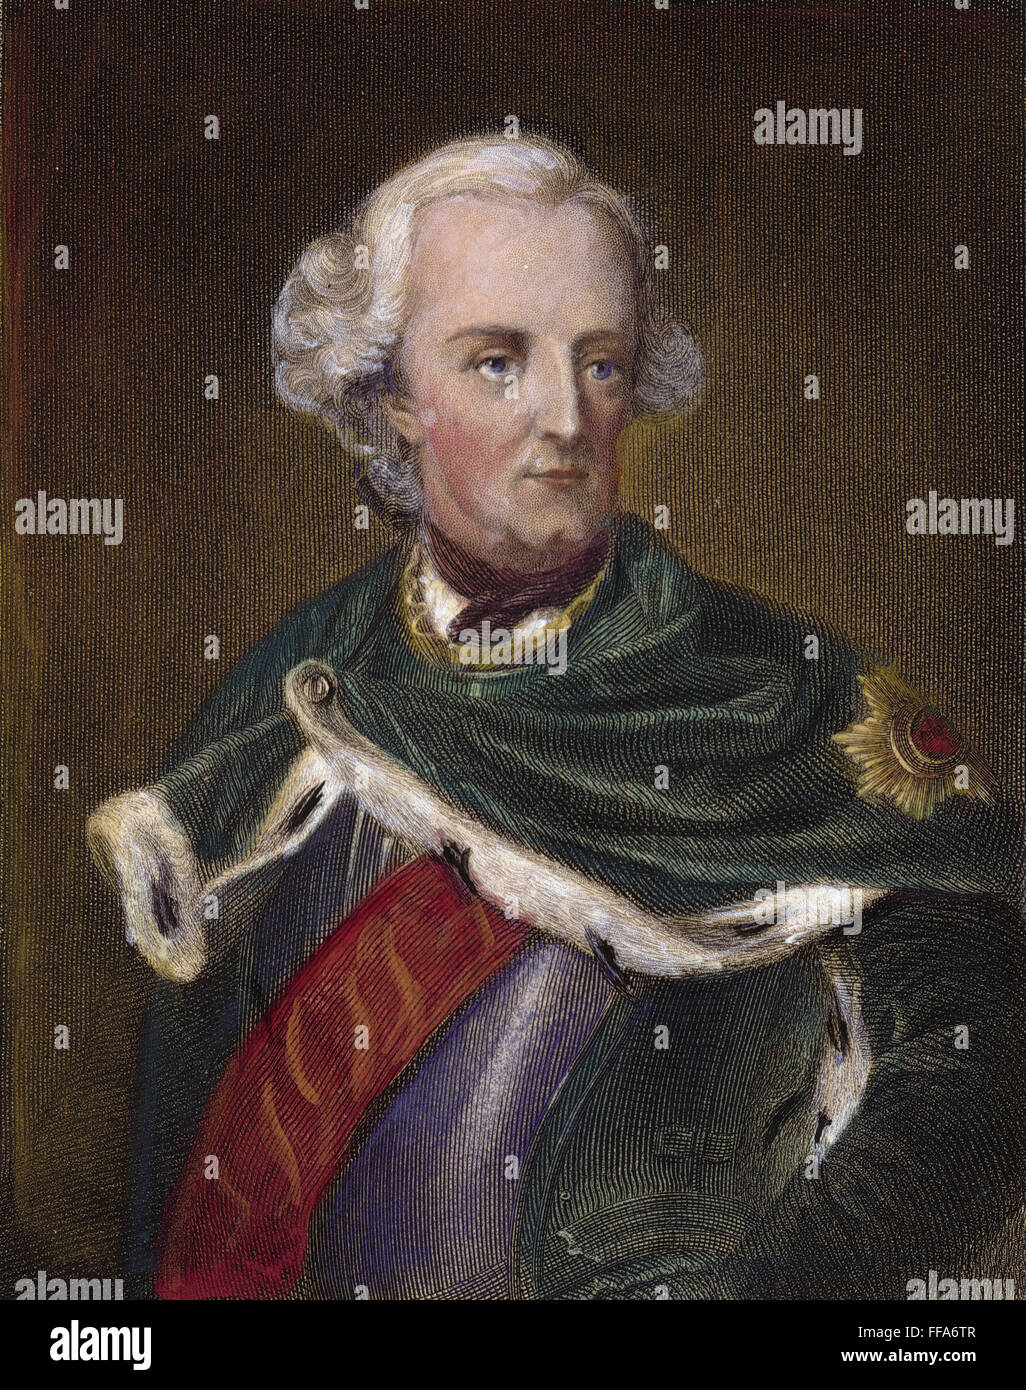 Federico II di Prussia /n(1712-1786). Incisione in acciaio, inglese, 1835. Foto Stock